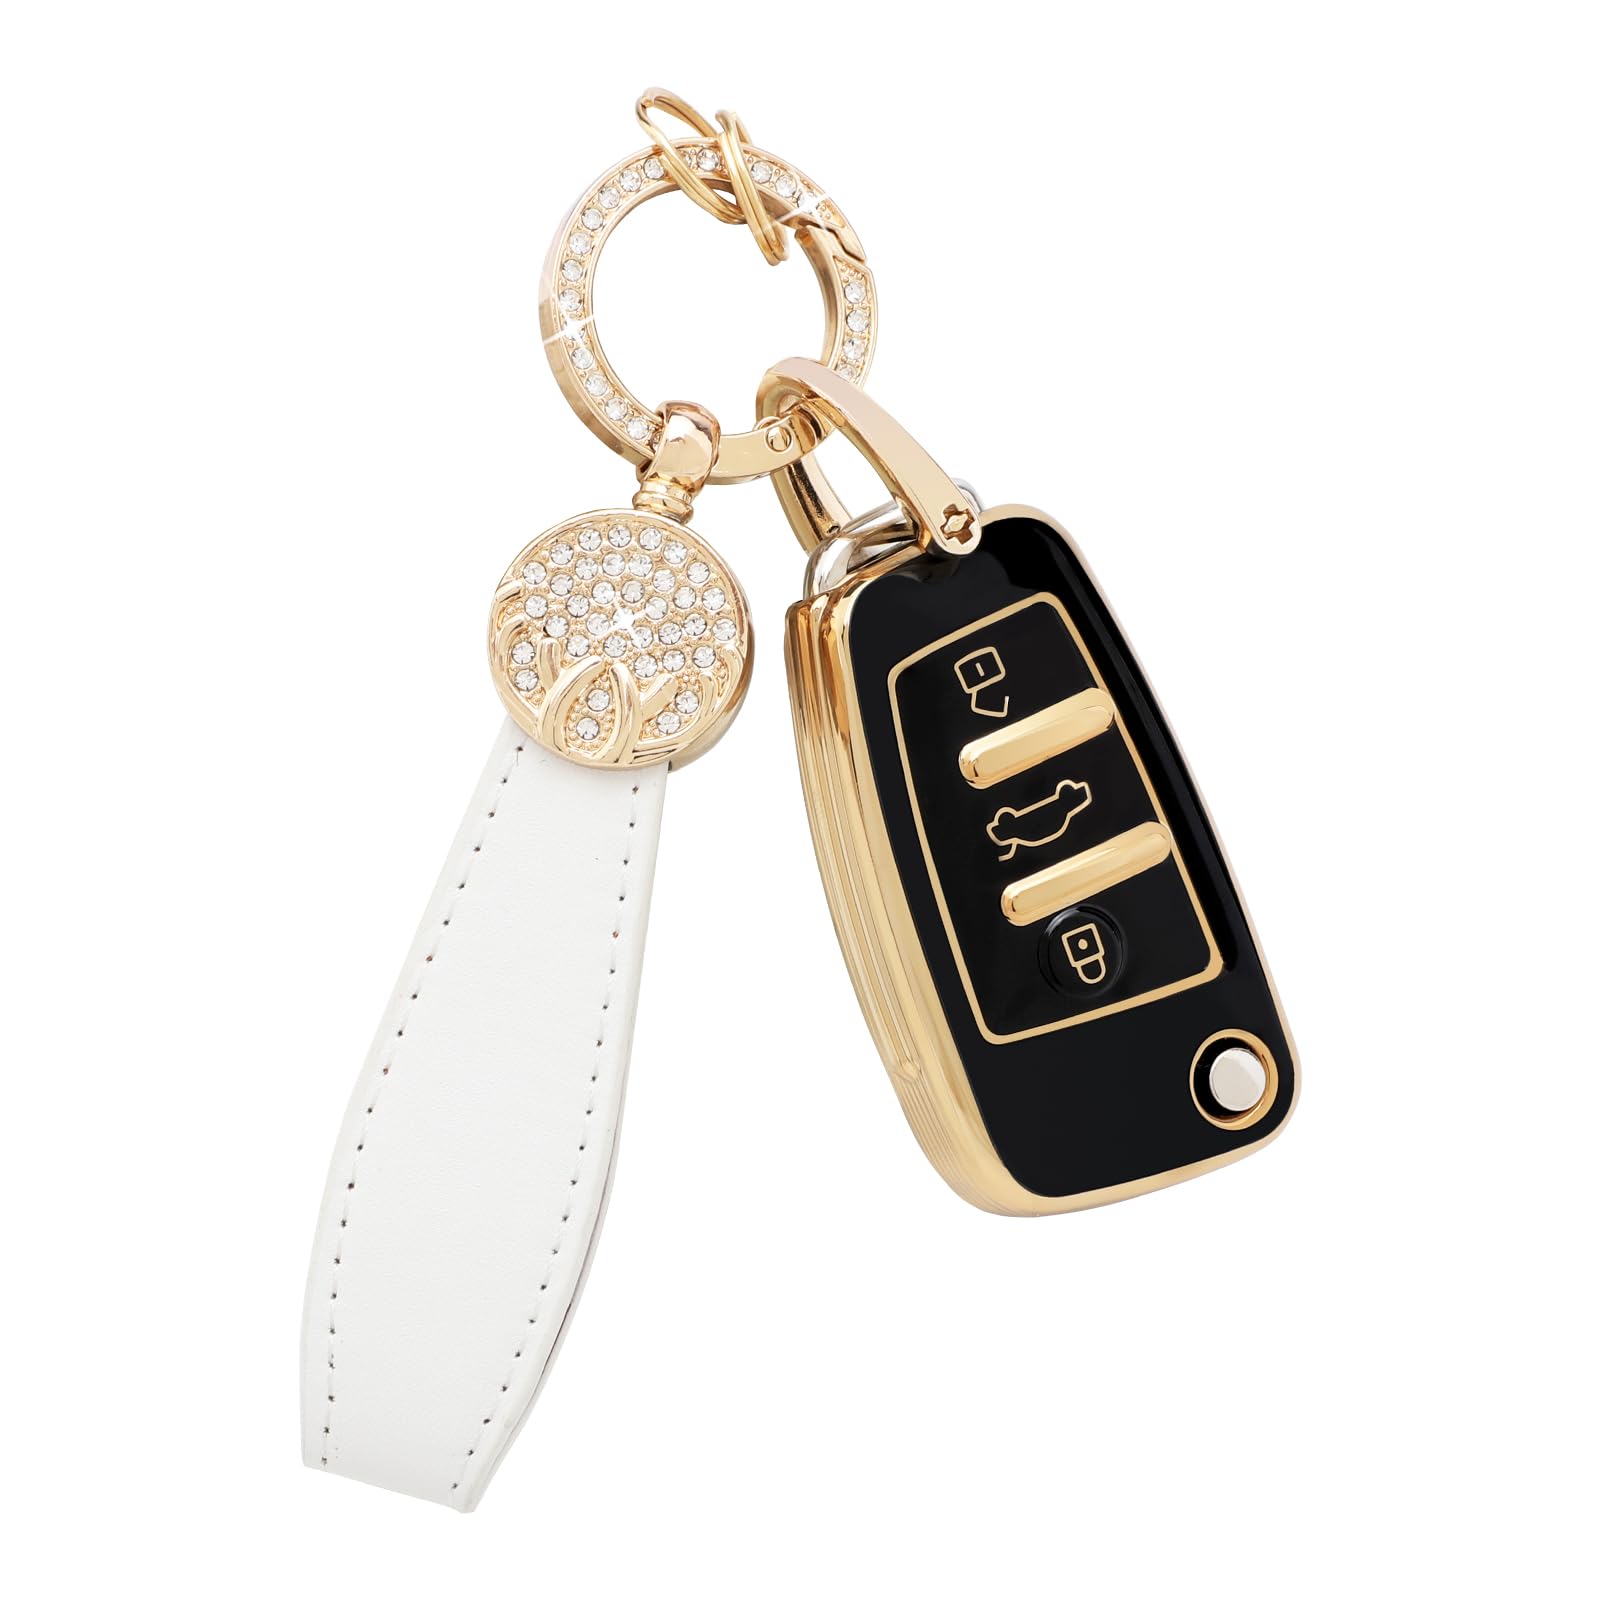 BLINGOOSE Autoschlüssel Hülle für Audi 3-Tasten Car Schlüsseletui Cover Schutz Bling Schlüsselanhänger Kompatibel mit Audi Q3 TT TTS A1 A3 A4 A6 S3 S4 Key Frauen Männer Schwarz Gold TPU von BLINGOOSE